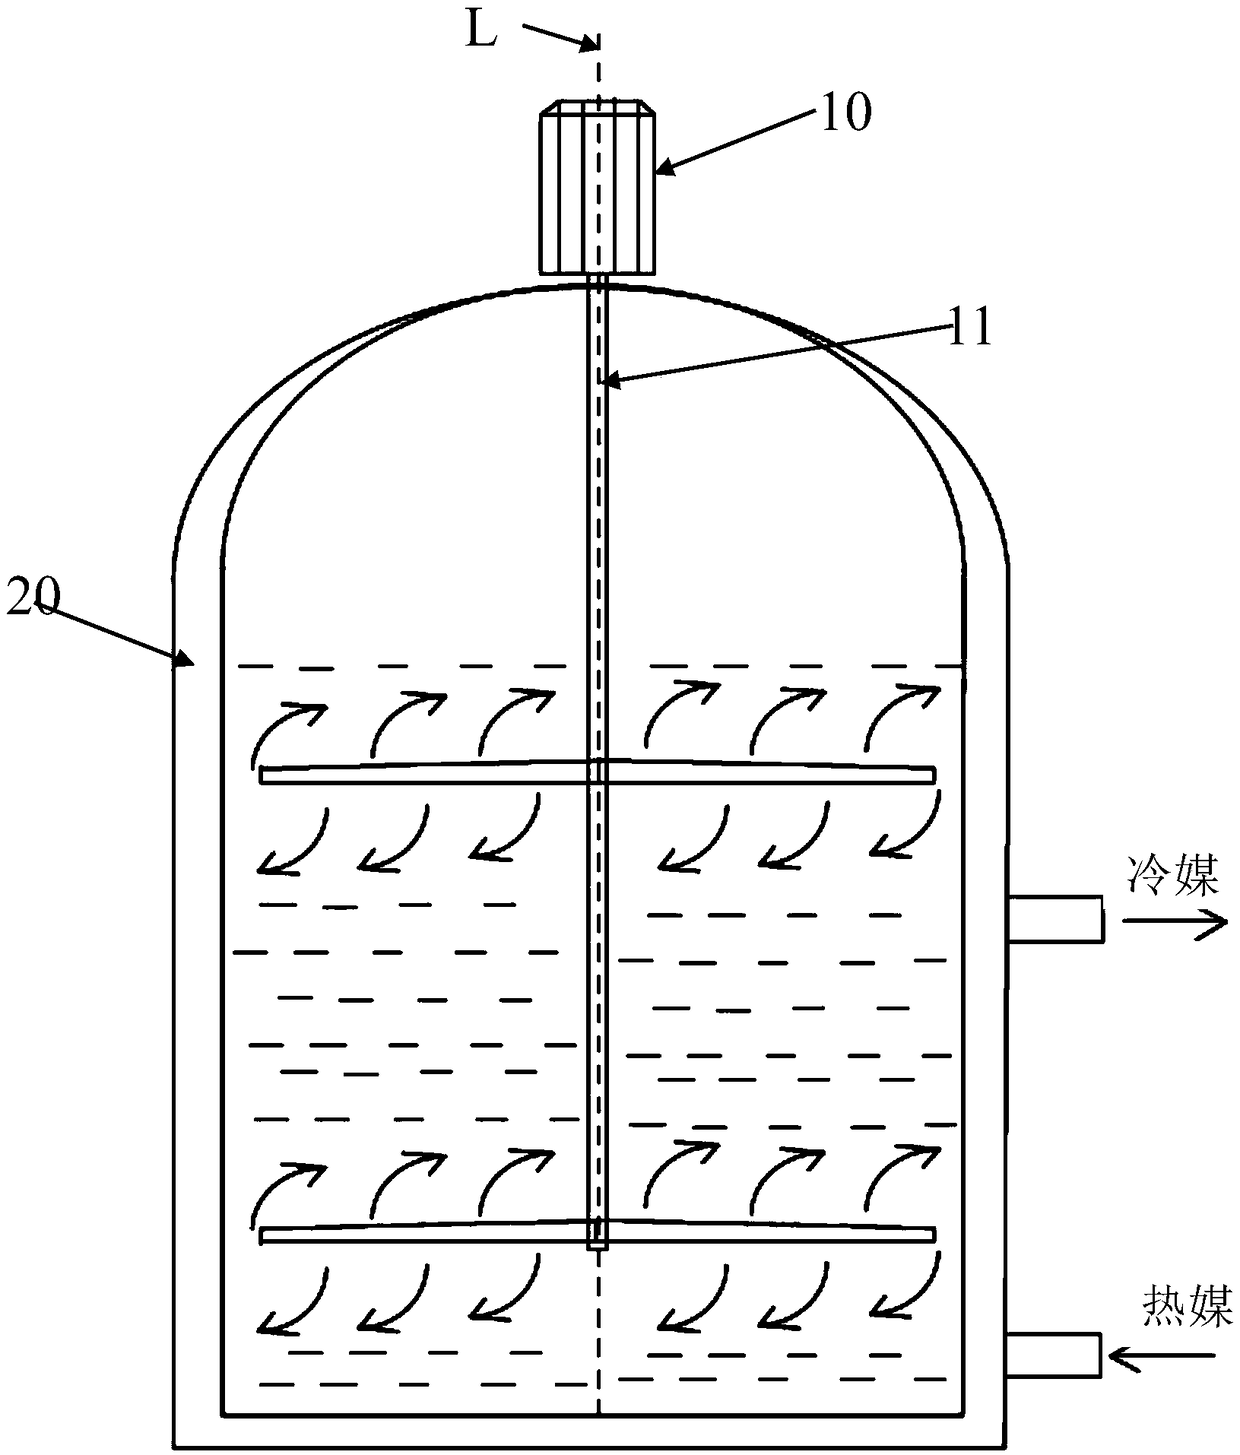 A high-efficiency dissolved oxygen stirrer for a fermentation tank and a fermentation tank